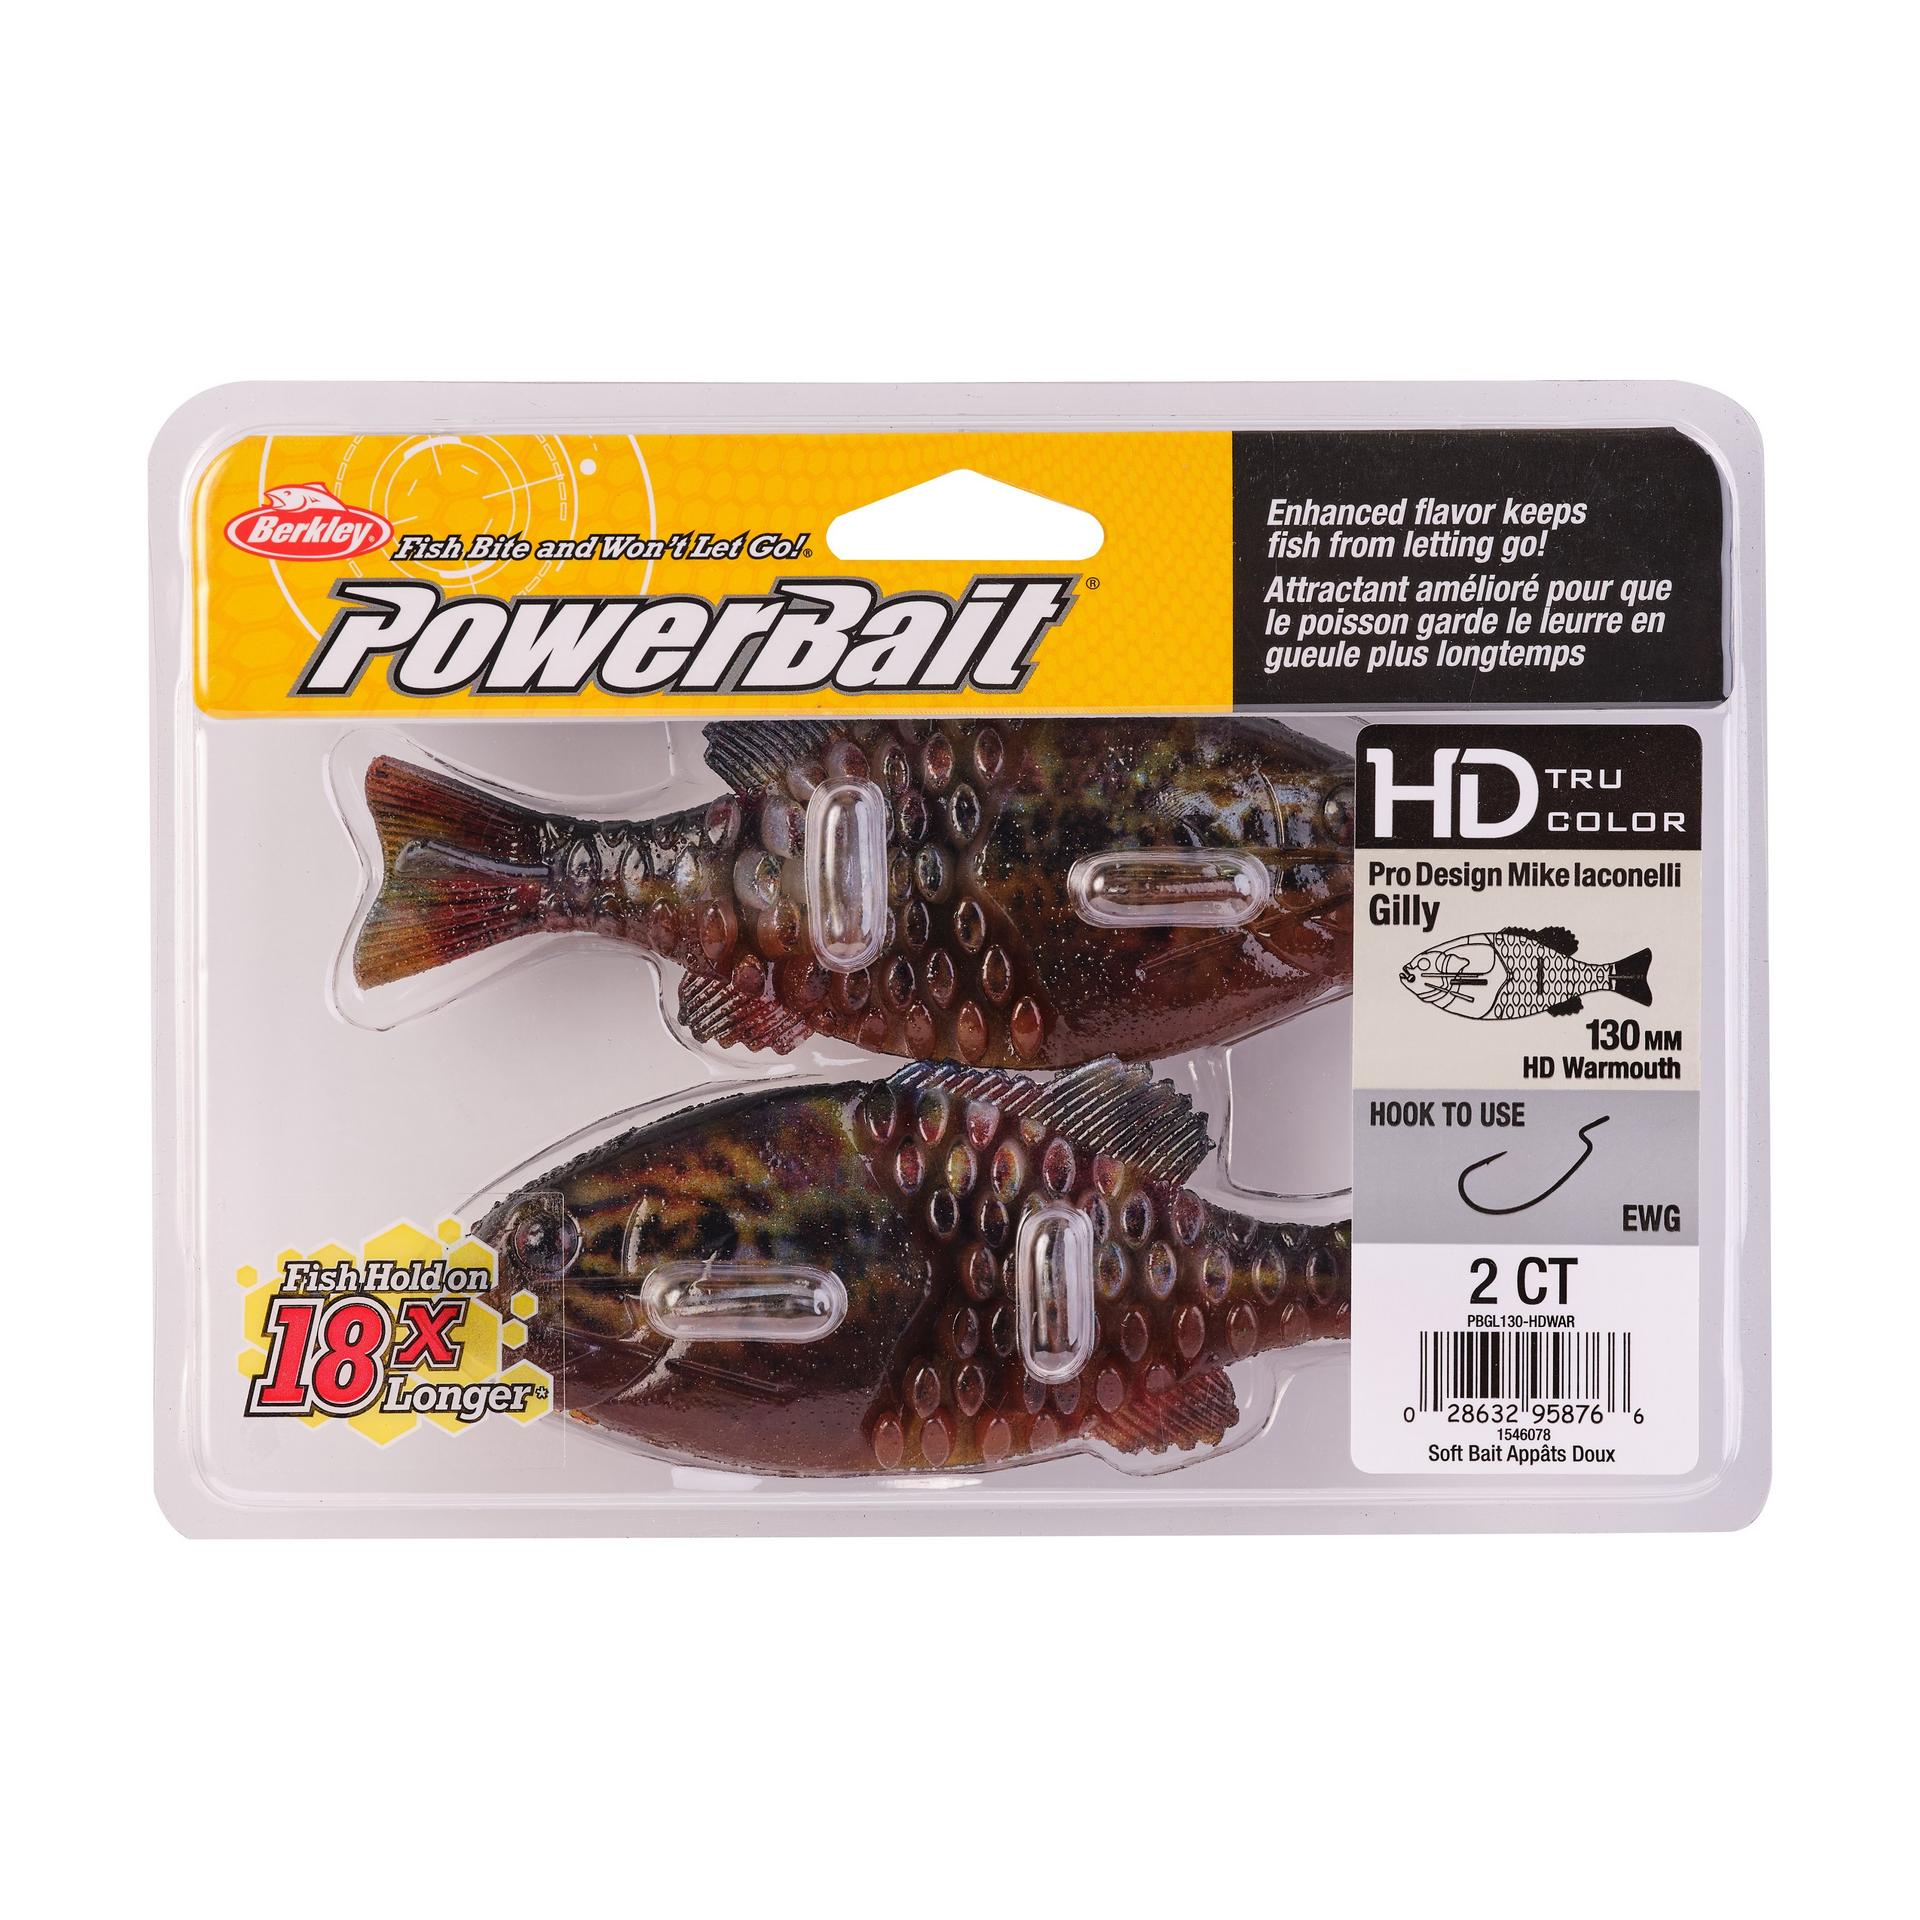 PowerBaitGilly HDWarmouth 130mm PKG | Berkley Fishing